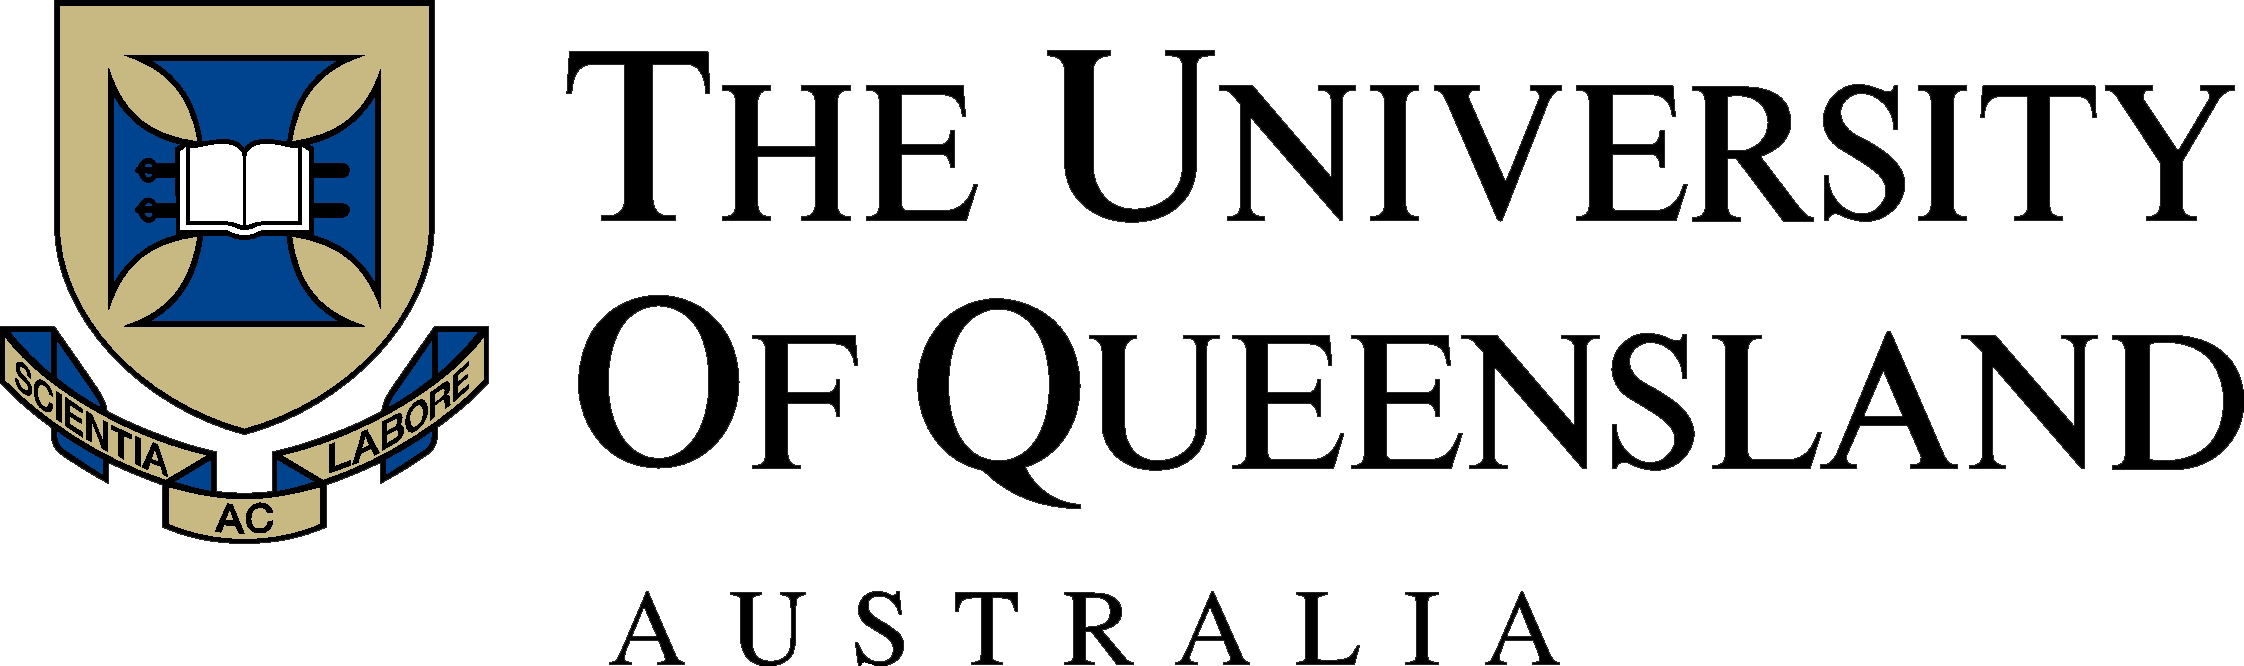 The University Of Queensland, Australia